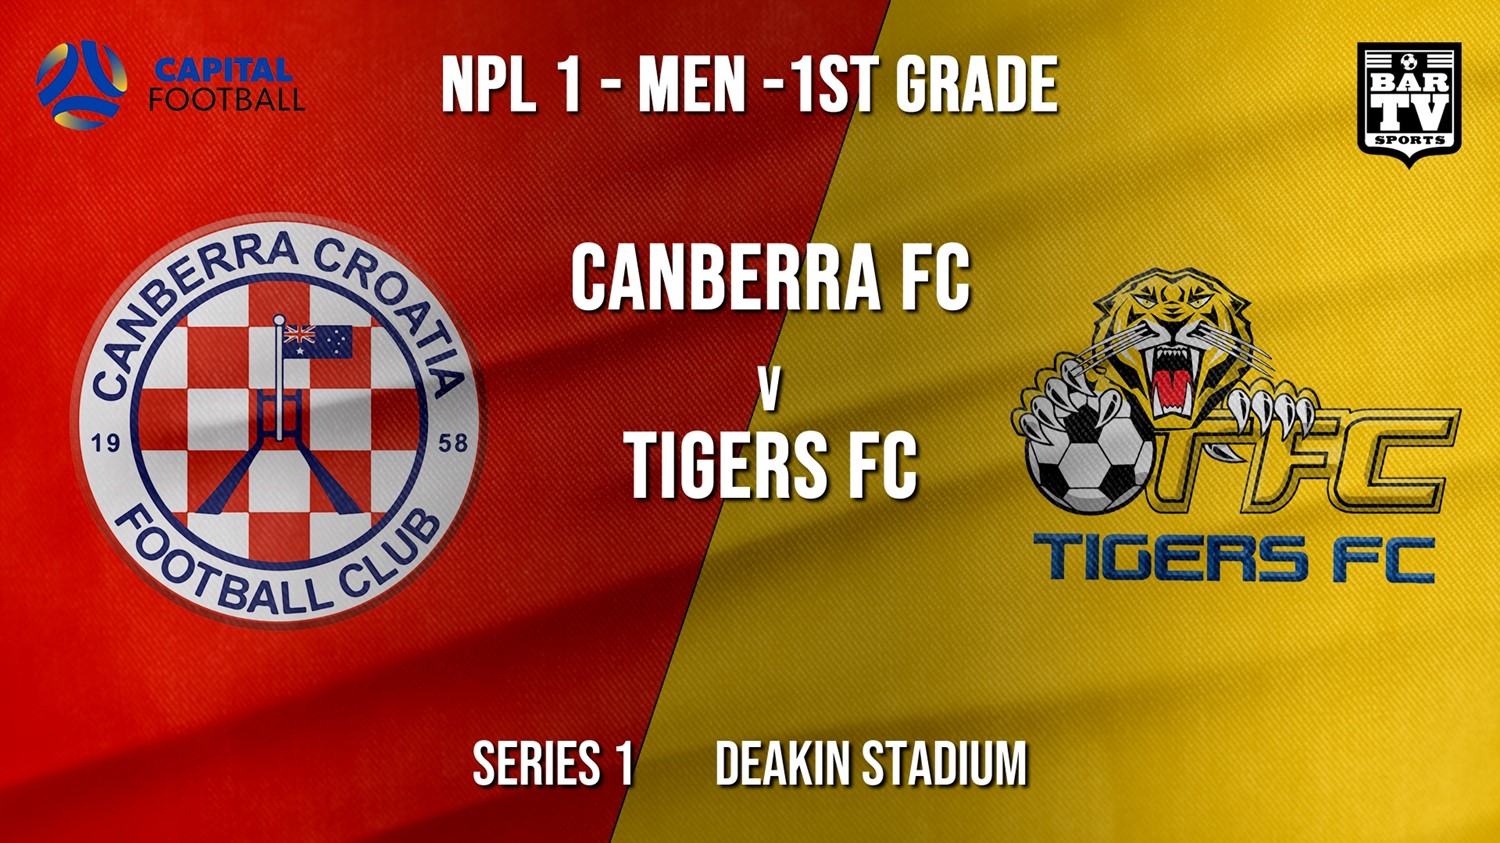 NPL - CAPITAL Series 1 - Canberra FC v Tigers FC Minigame Slate Image